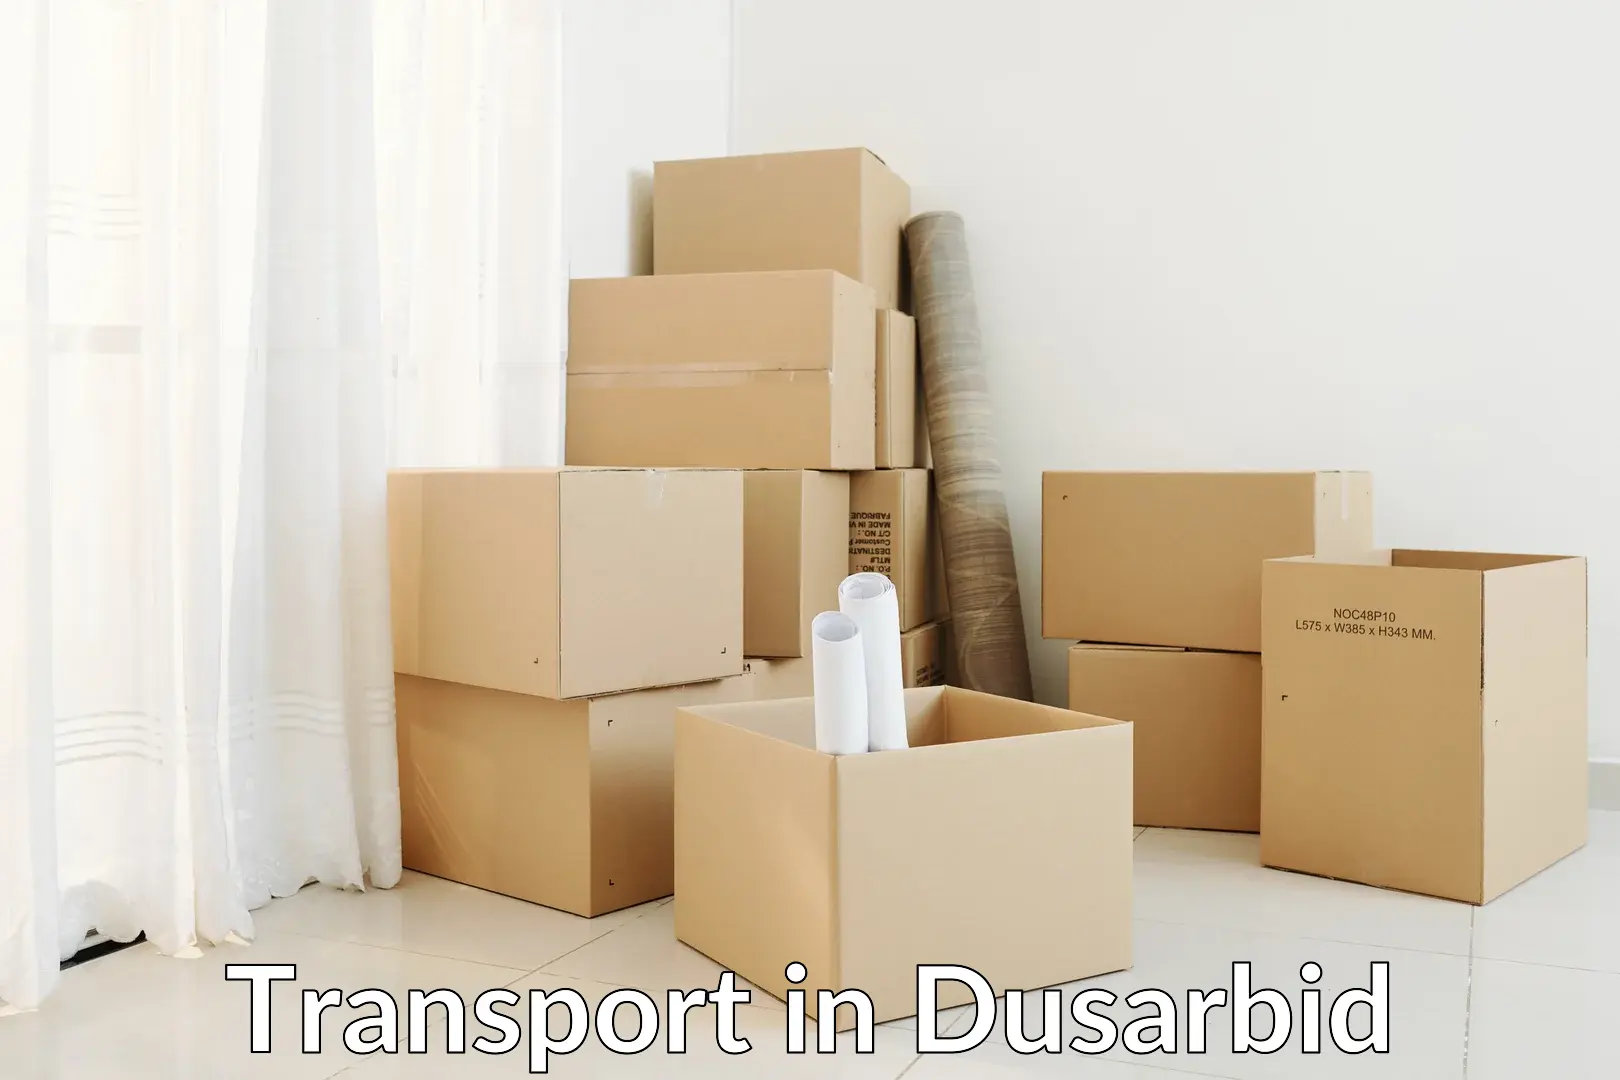 Pick up transport service in Dusarbid